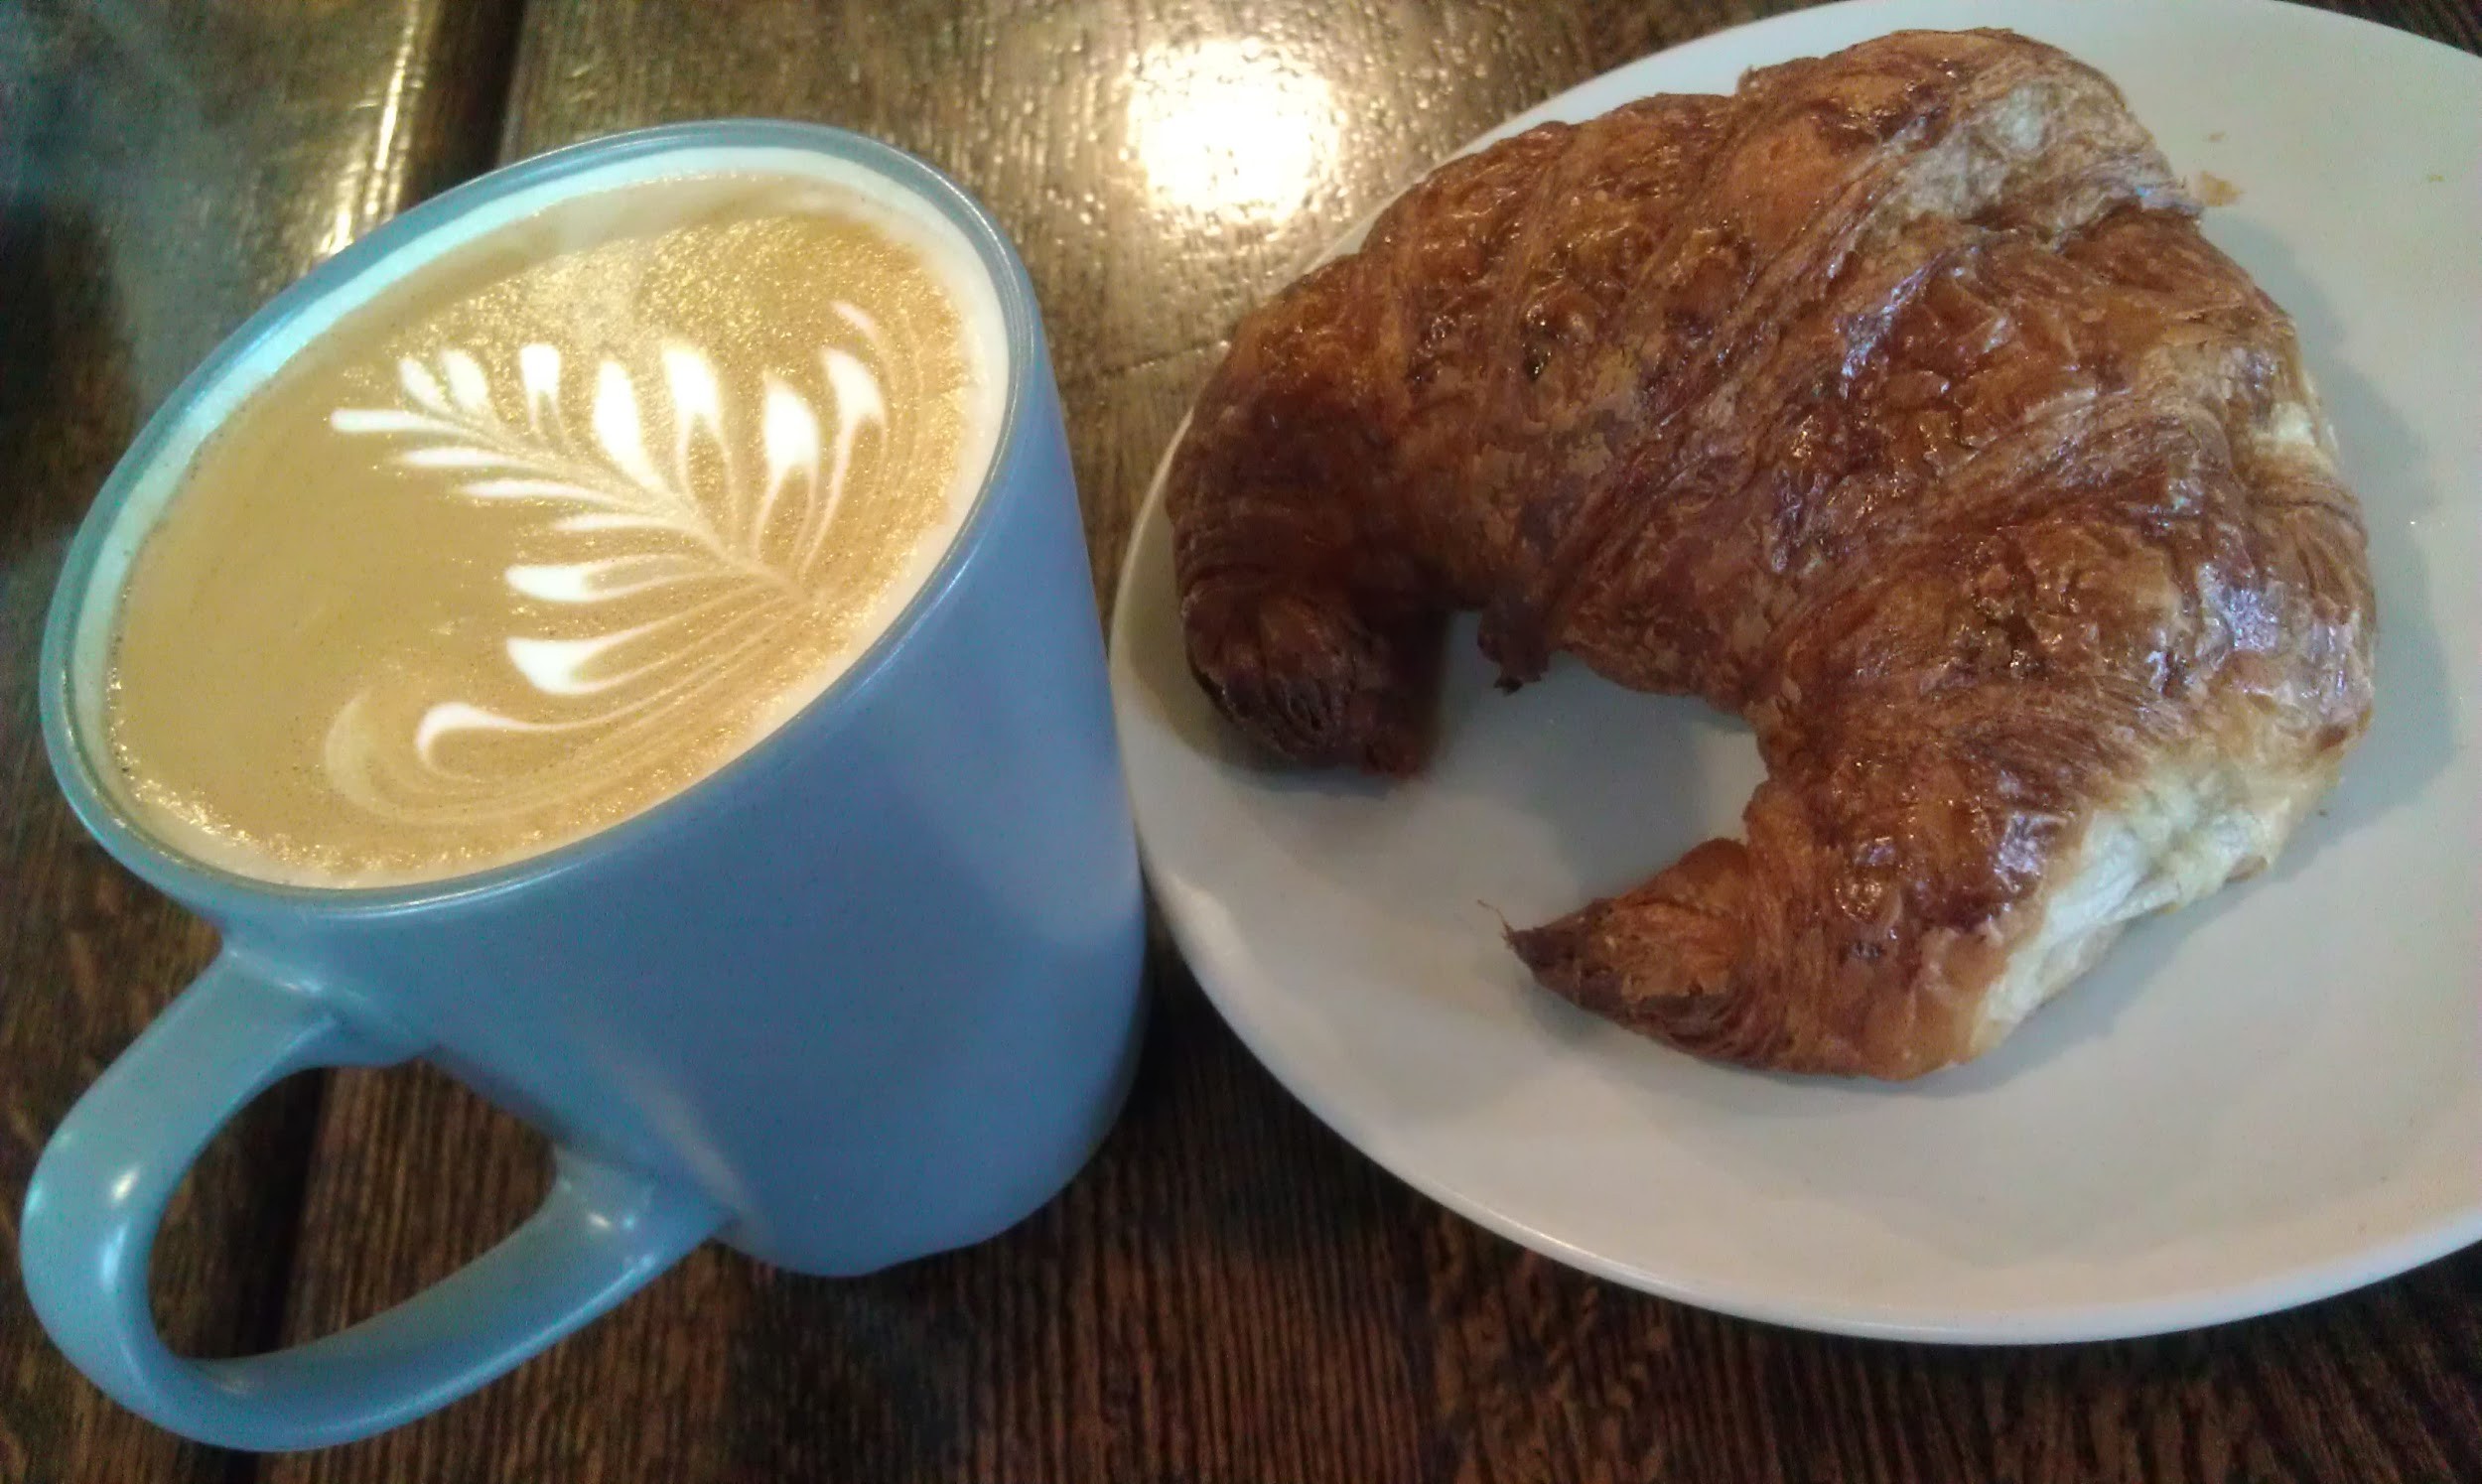 taste of morning croissant and latte